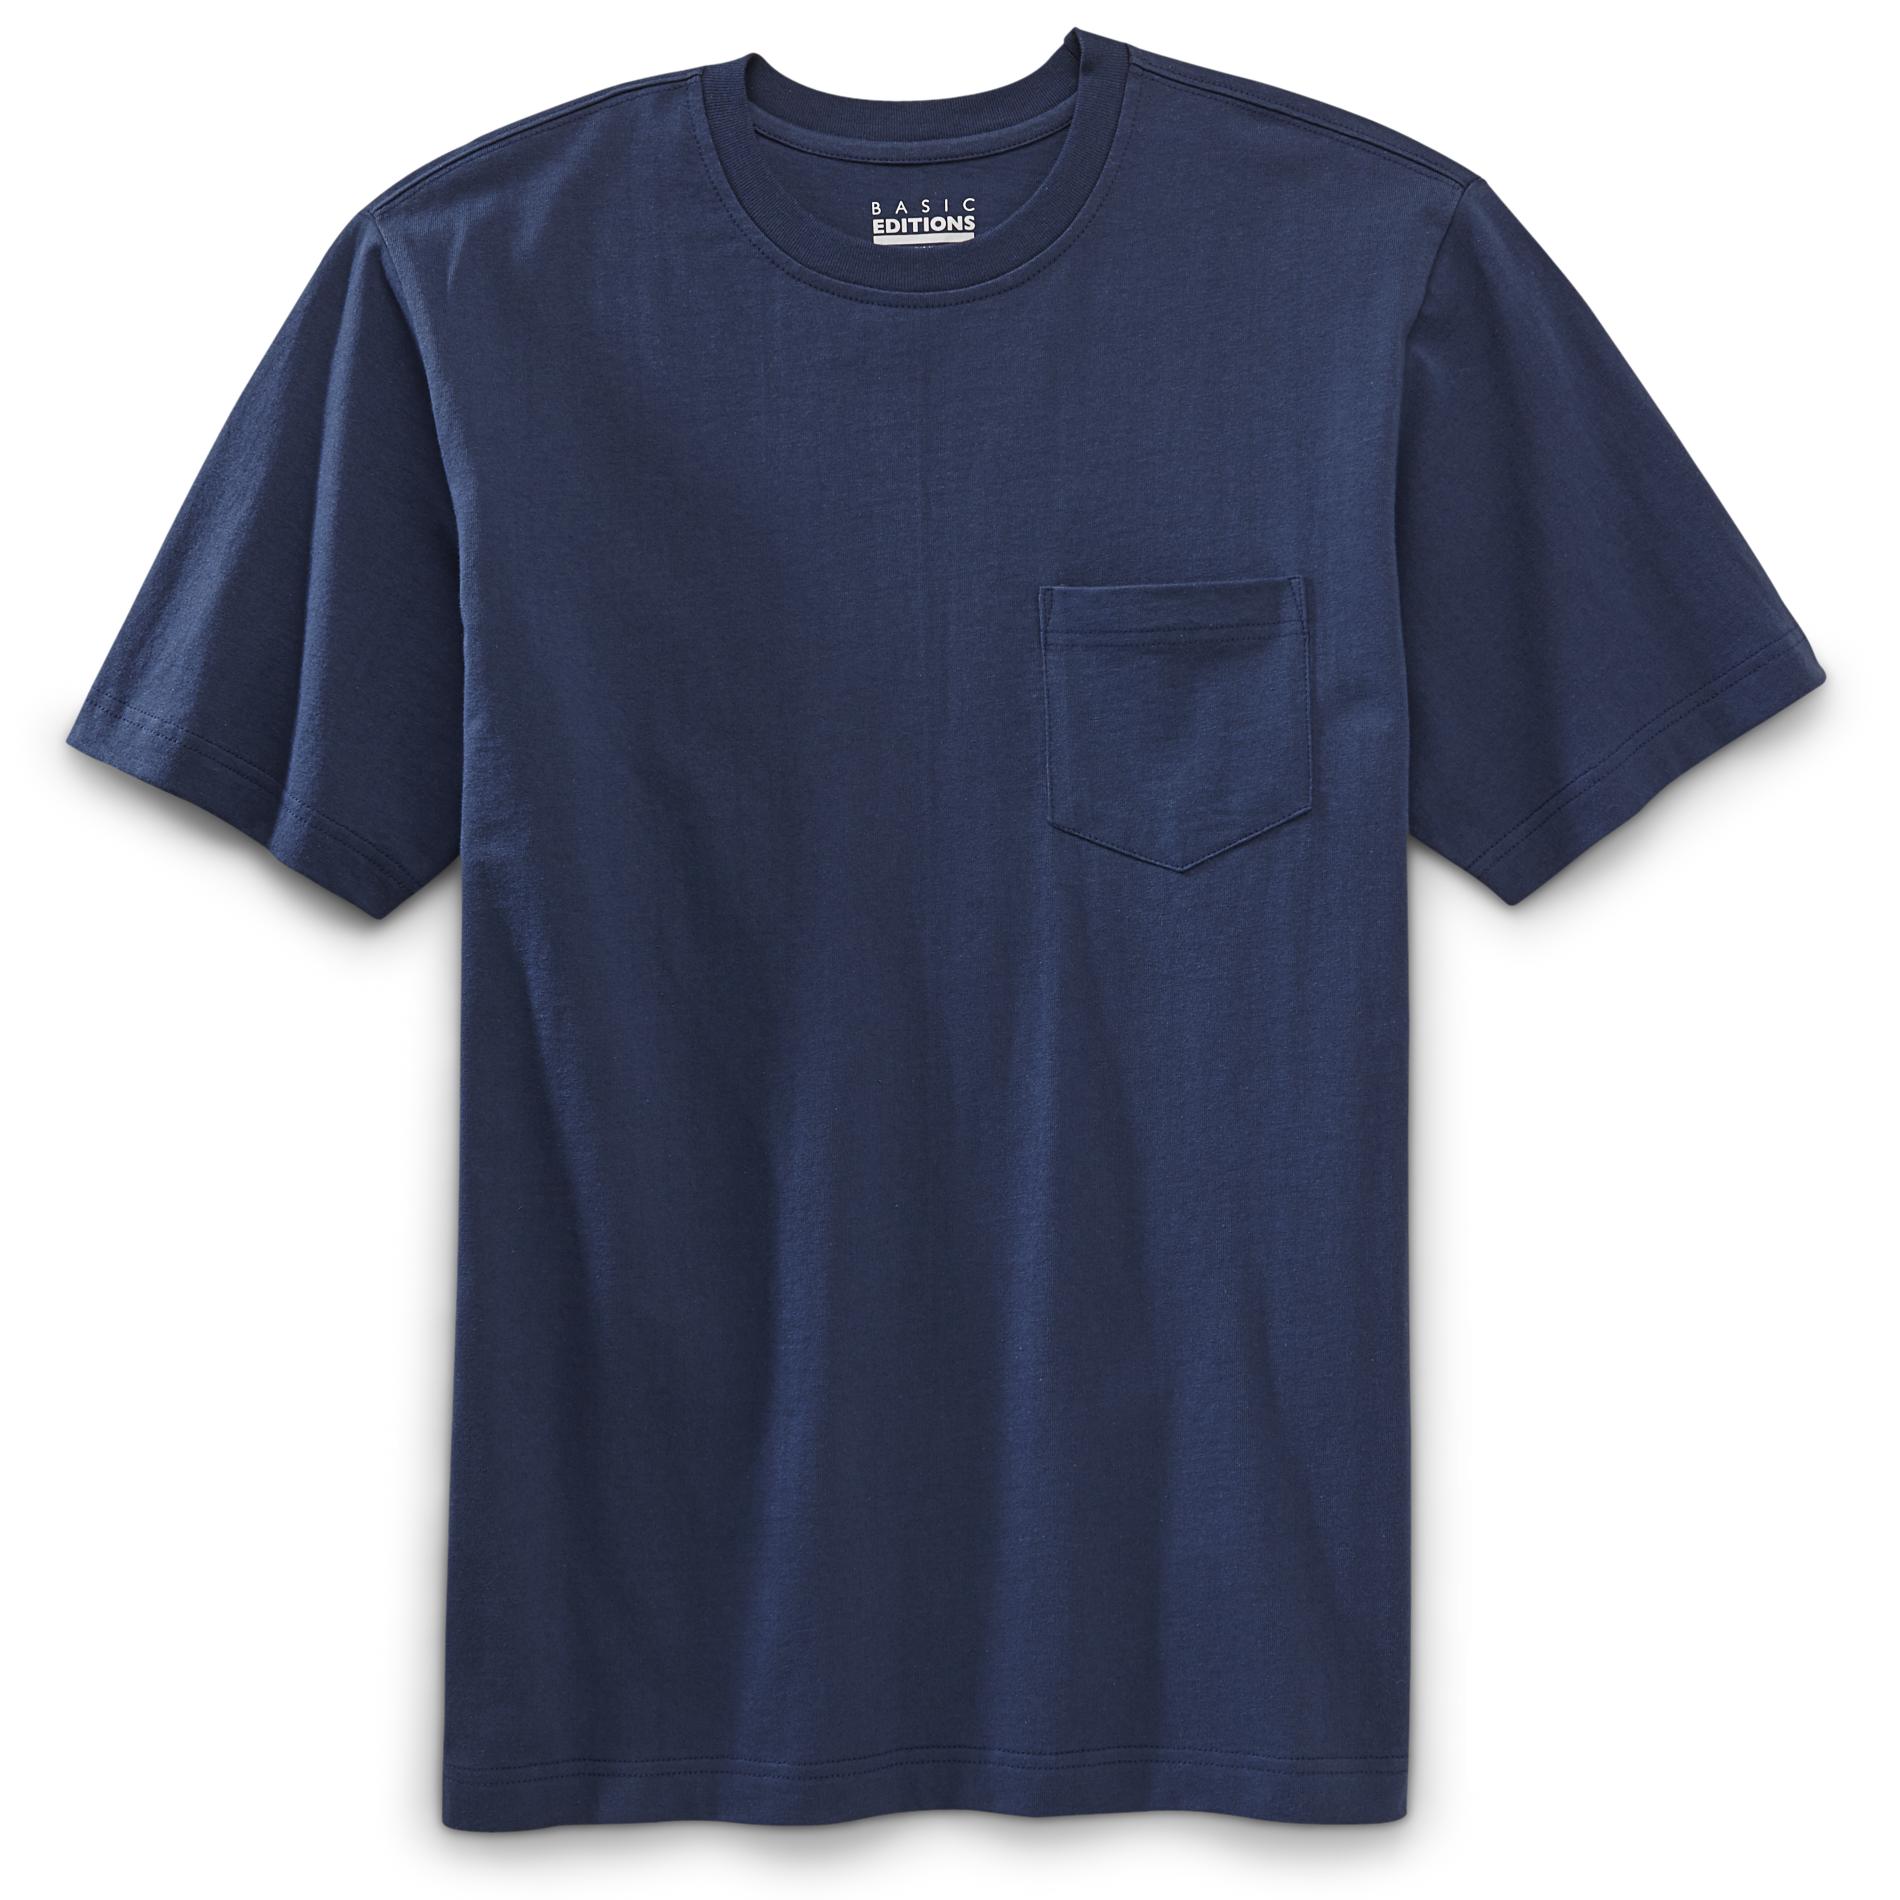 Basic Editions Men's Big & Tall Pocket T-Shirt Size XLT